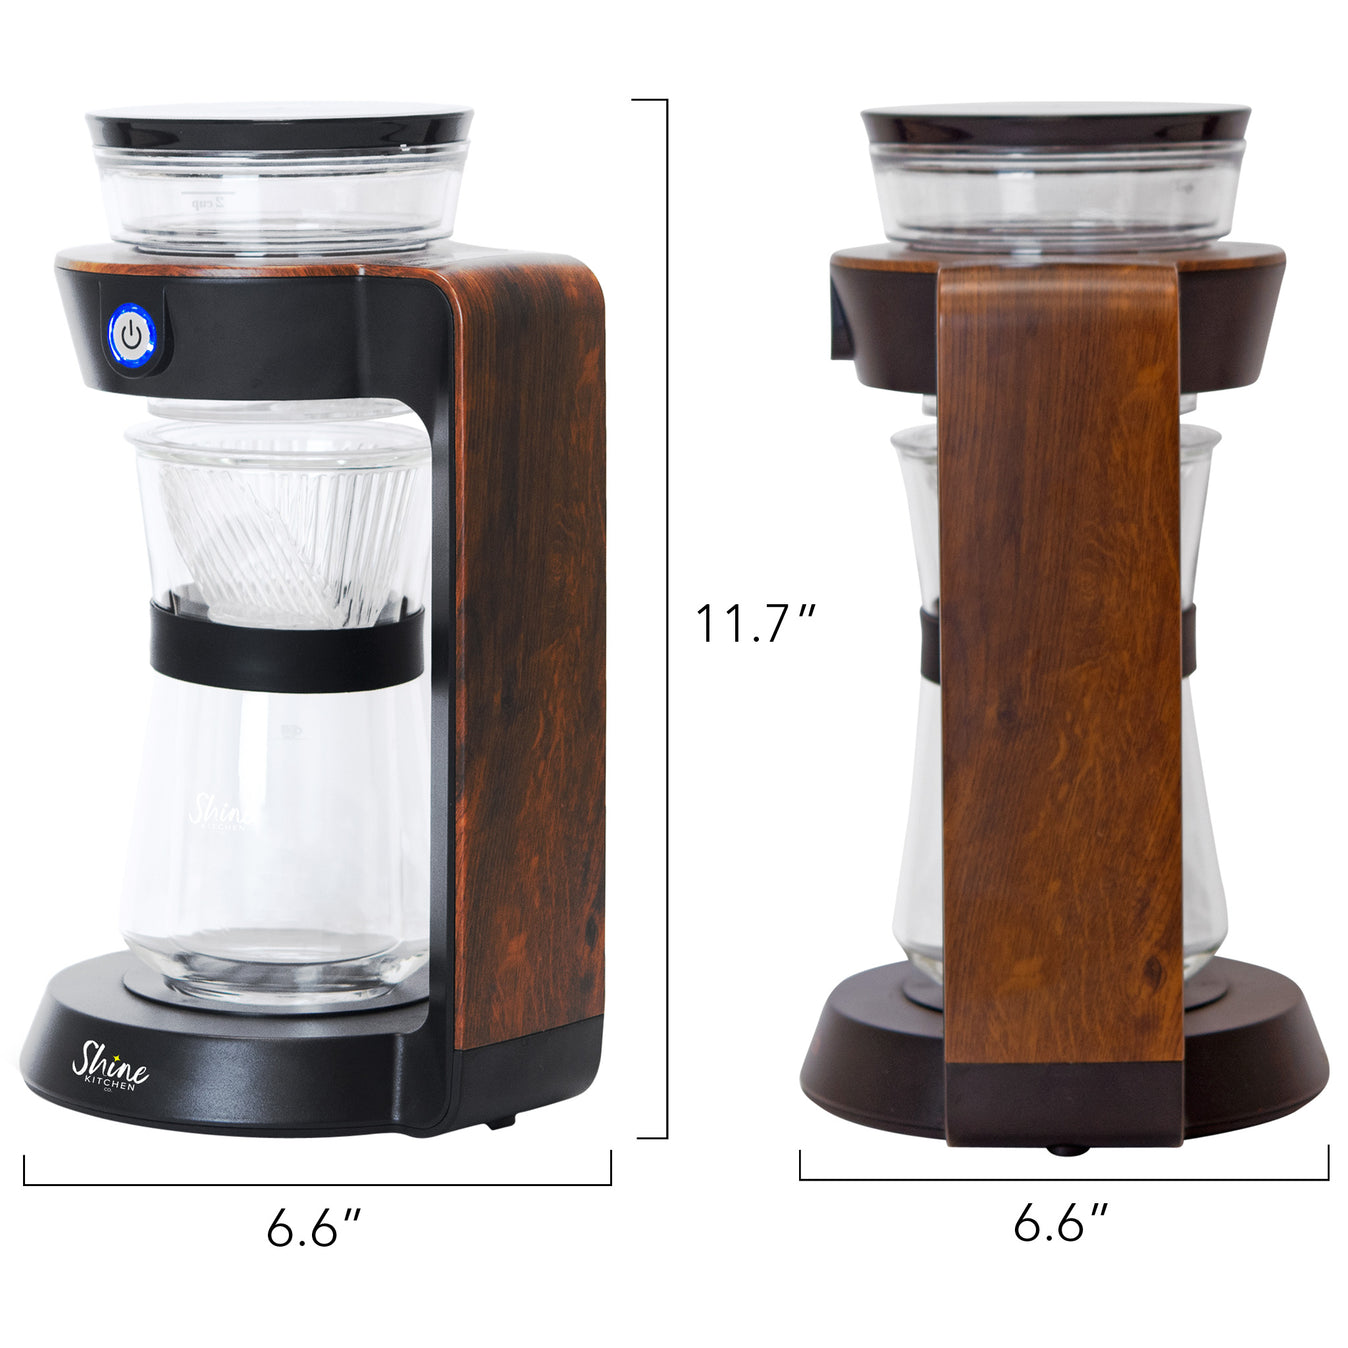 Shine Kitchen Co. Autopour Automatic Pour Over Coffee Machine 11.7 x 6.6 inches